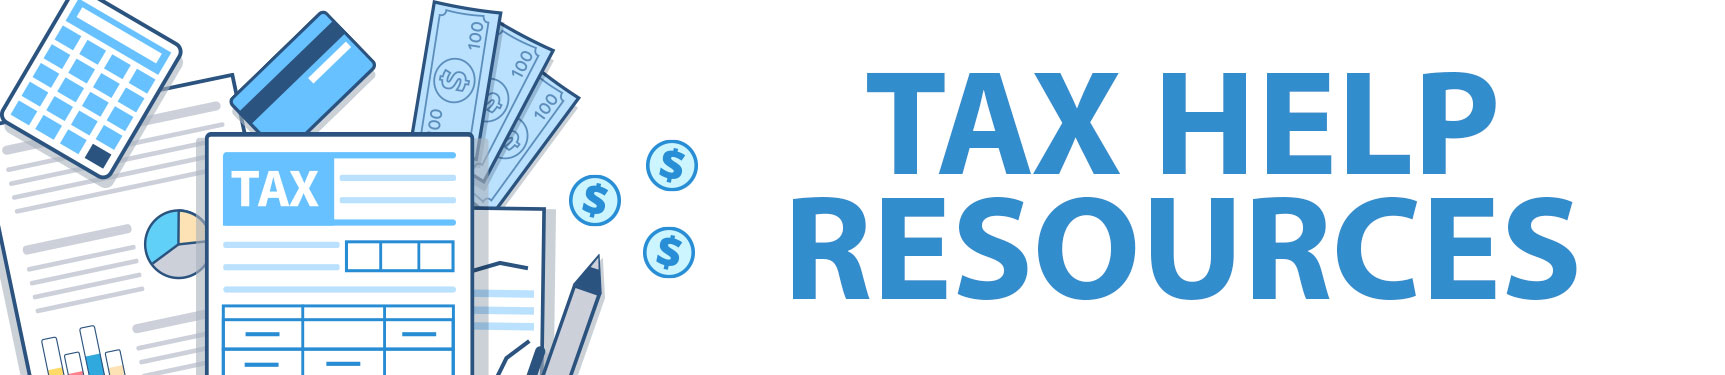 Tax Help Resources